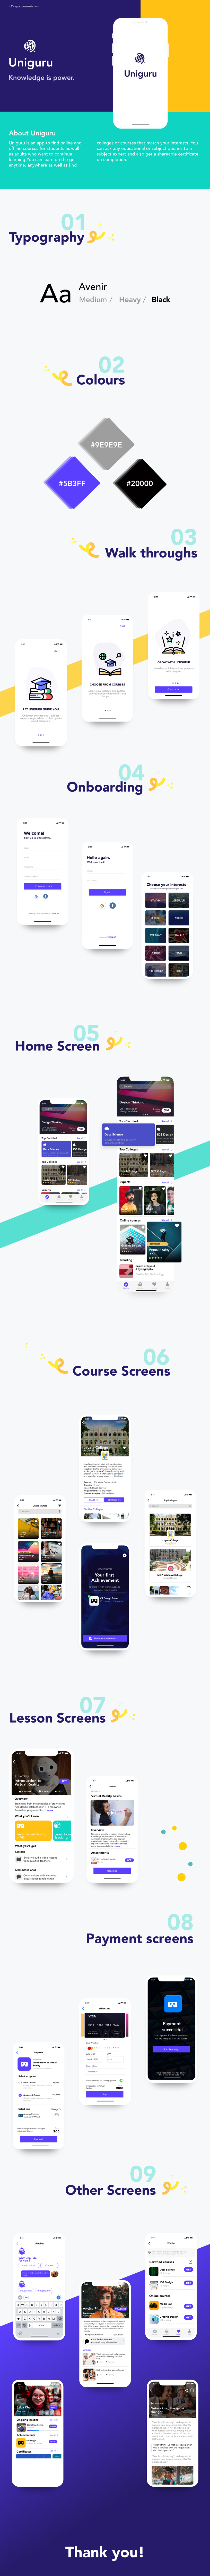 user experience ux/ui Education app college ios green purple yellow